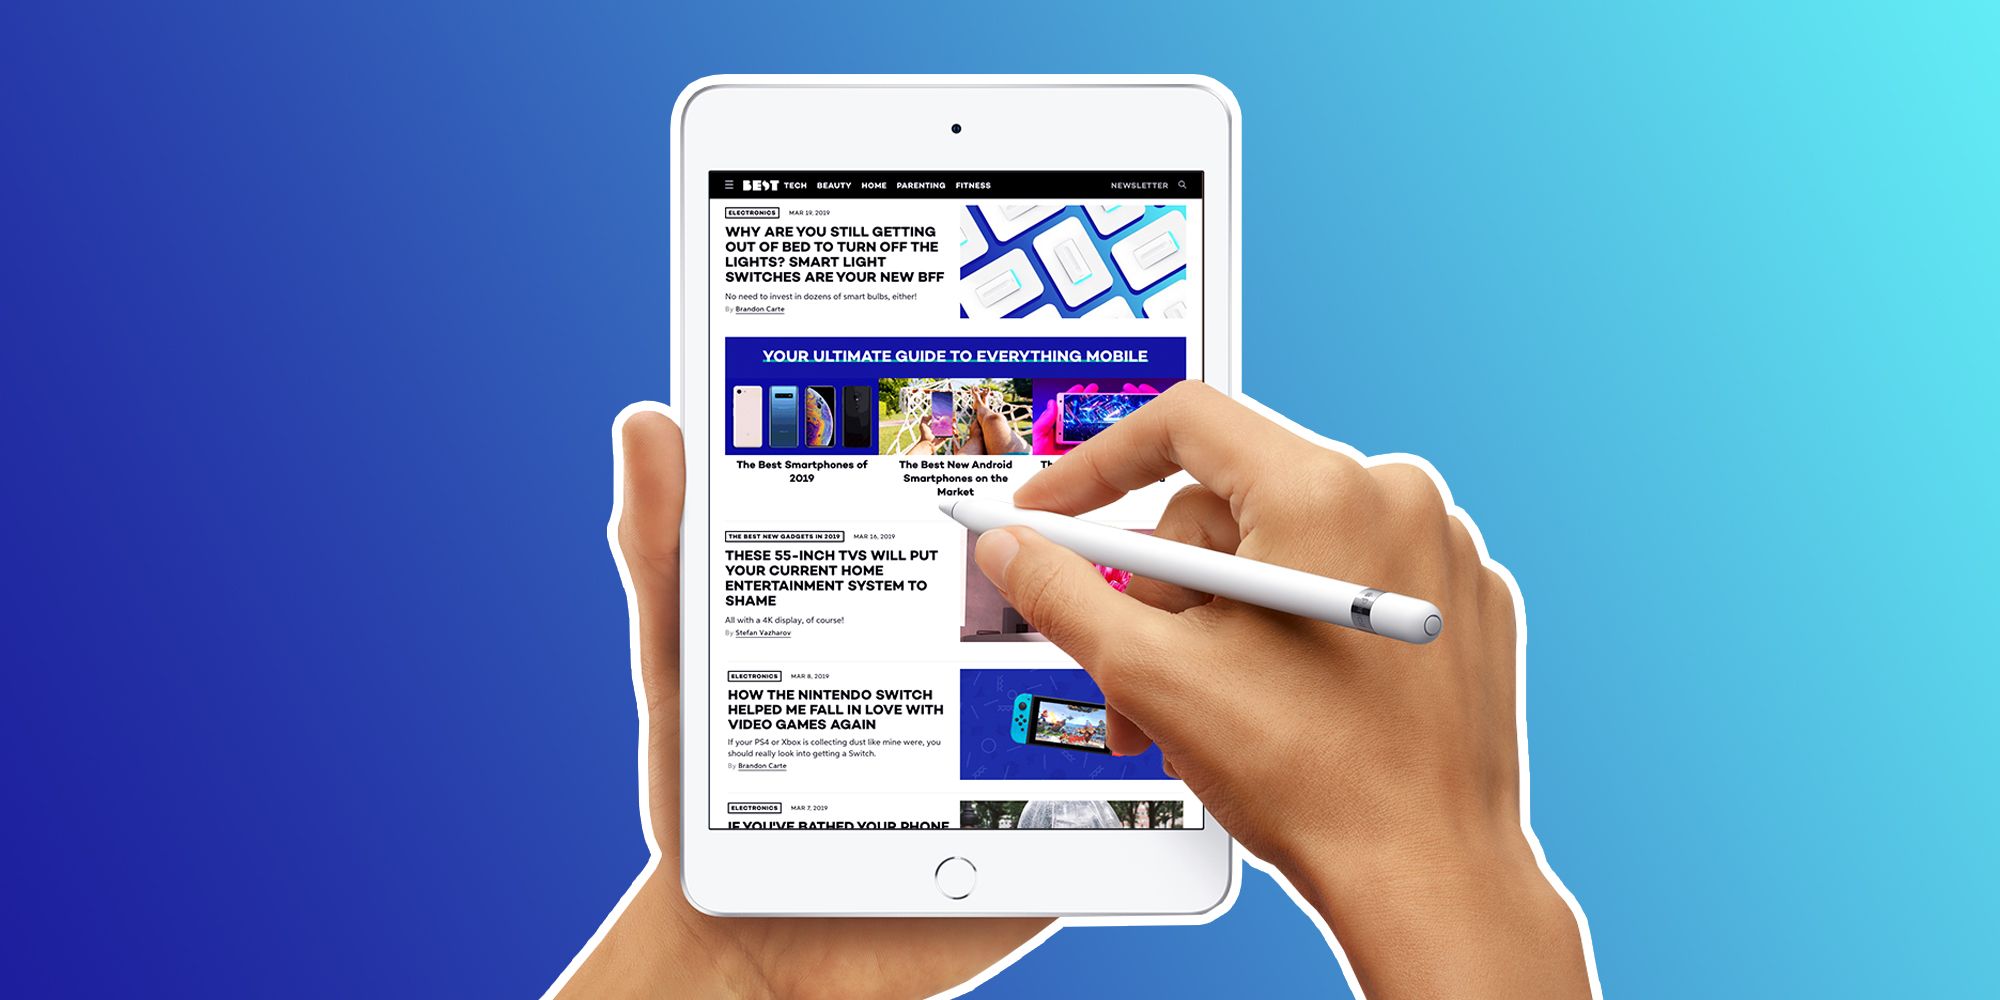 The Apple iPad Mini 4 Review